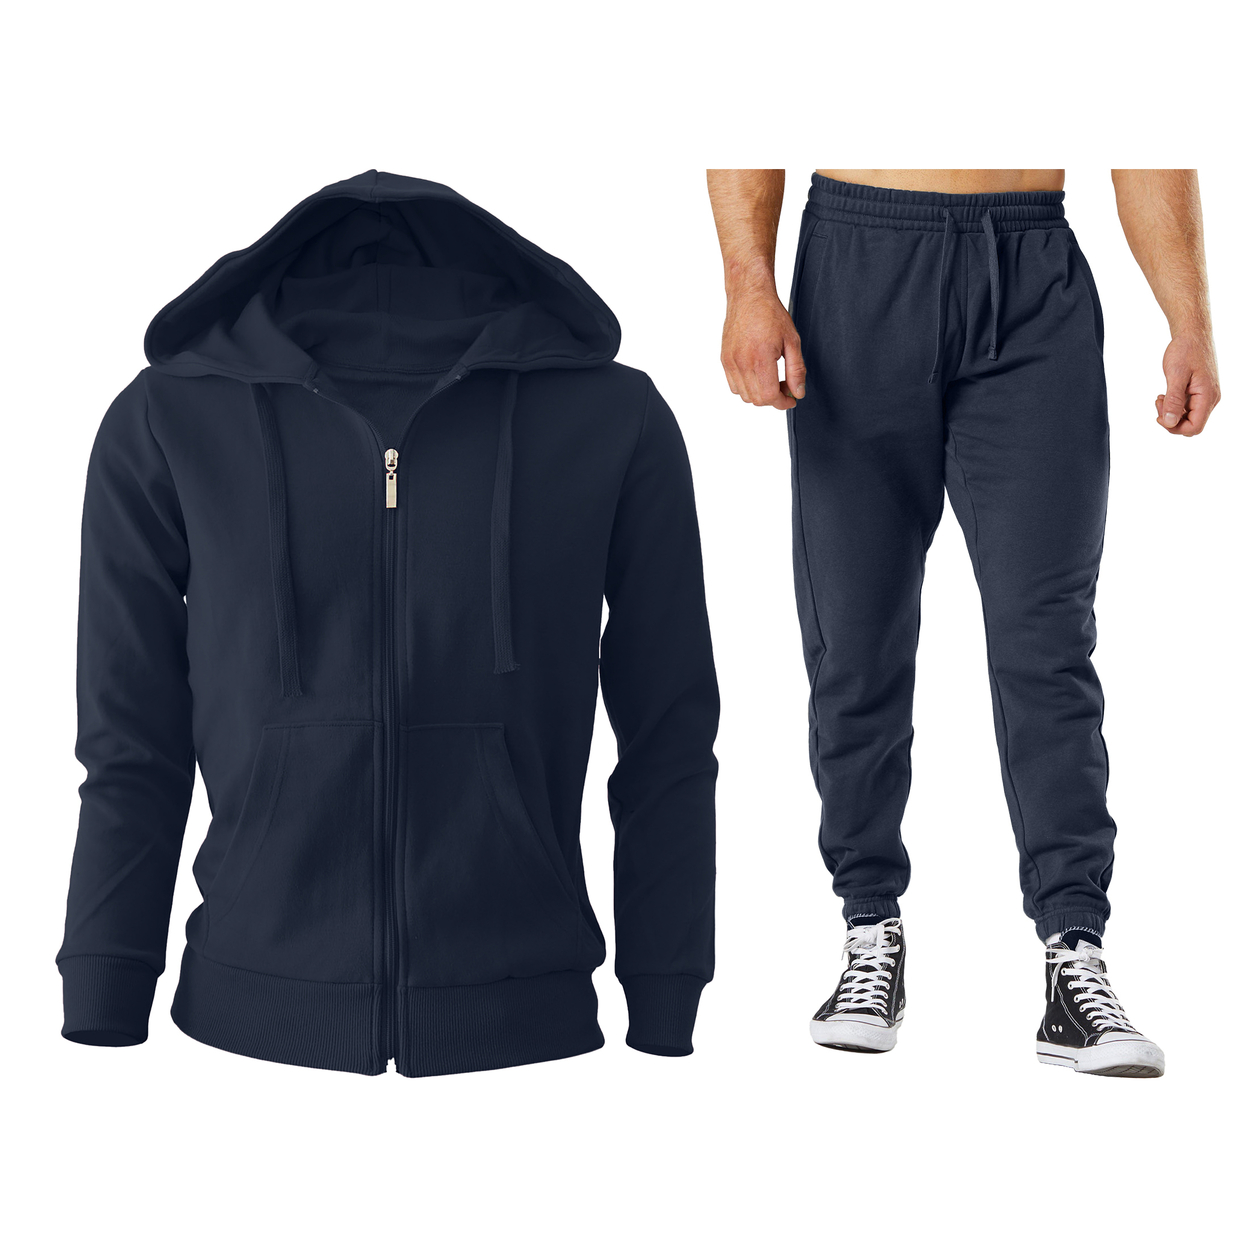 4-Piece: Men's Winter Warm Cozy Athletic Multi-Pockets BIG & TALL Sweatsuit Set - Grey, Xx-large